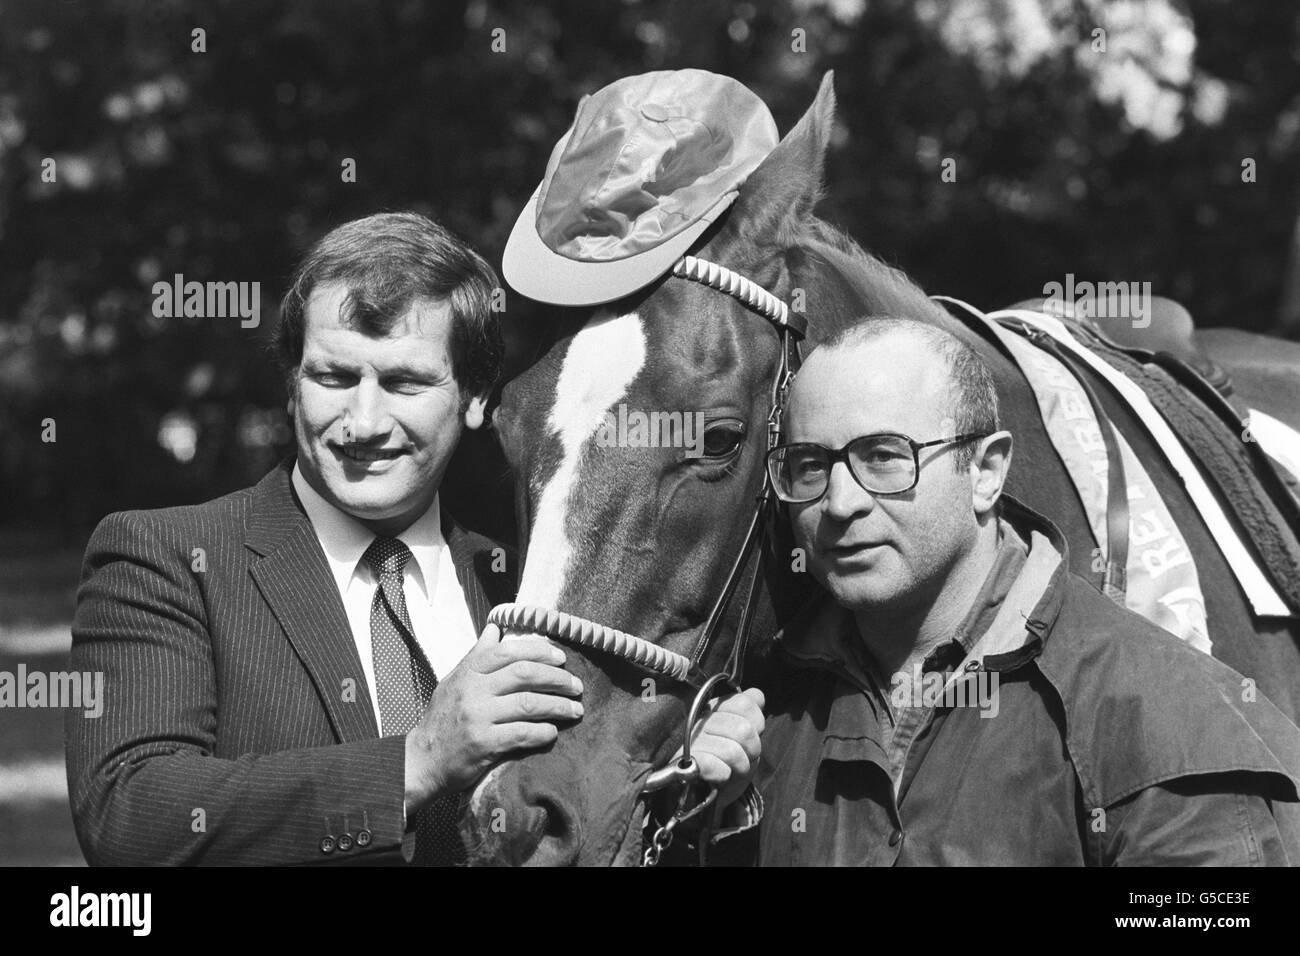 Horse Racing - Bob Champion and Aldaniti Sponsored Walk - London Stock Photo